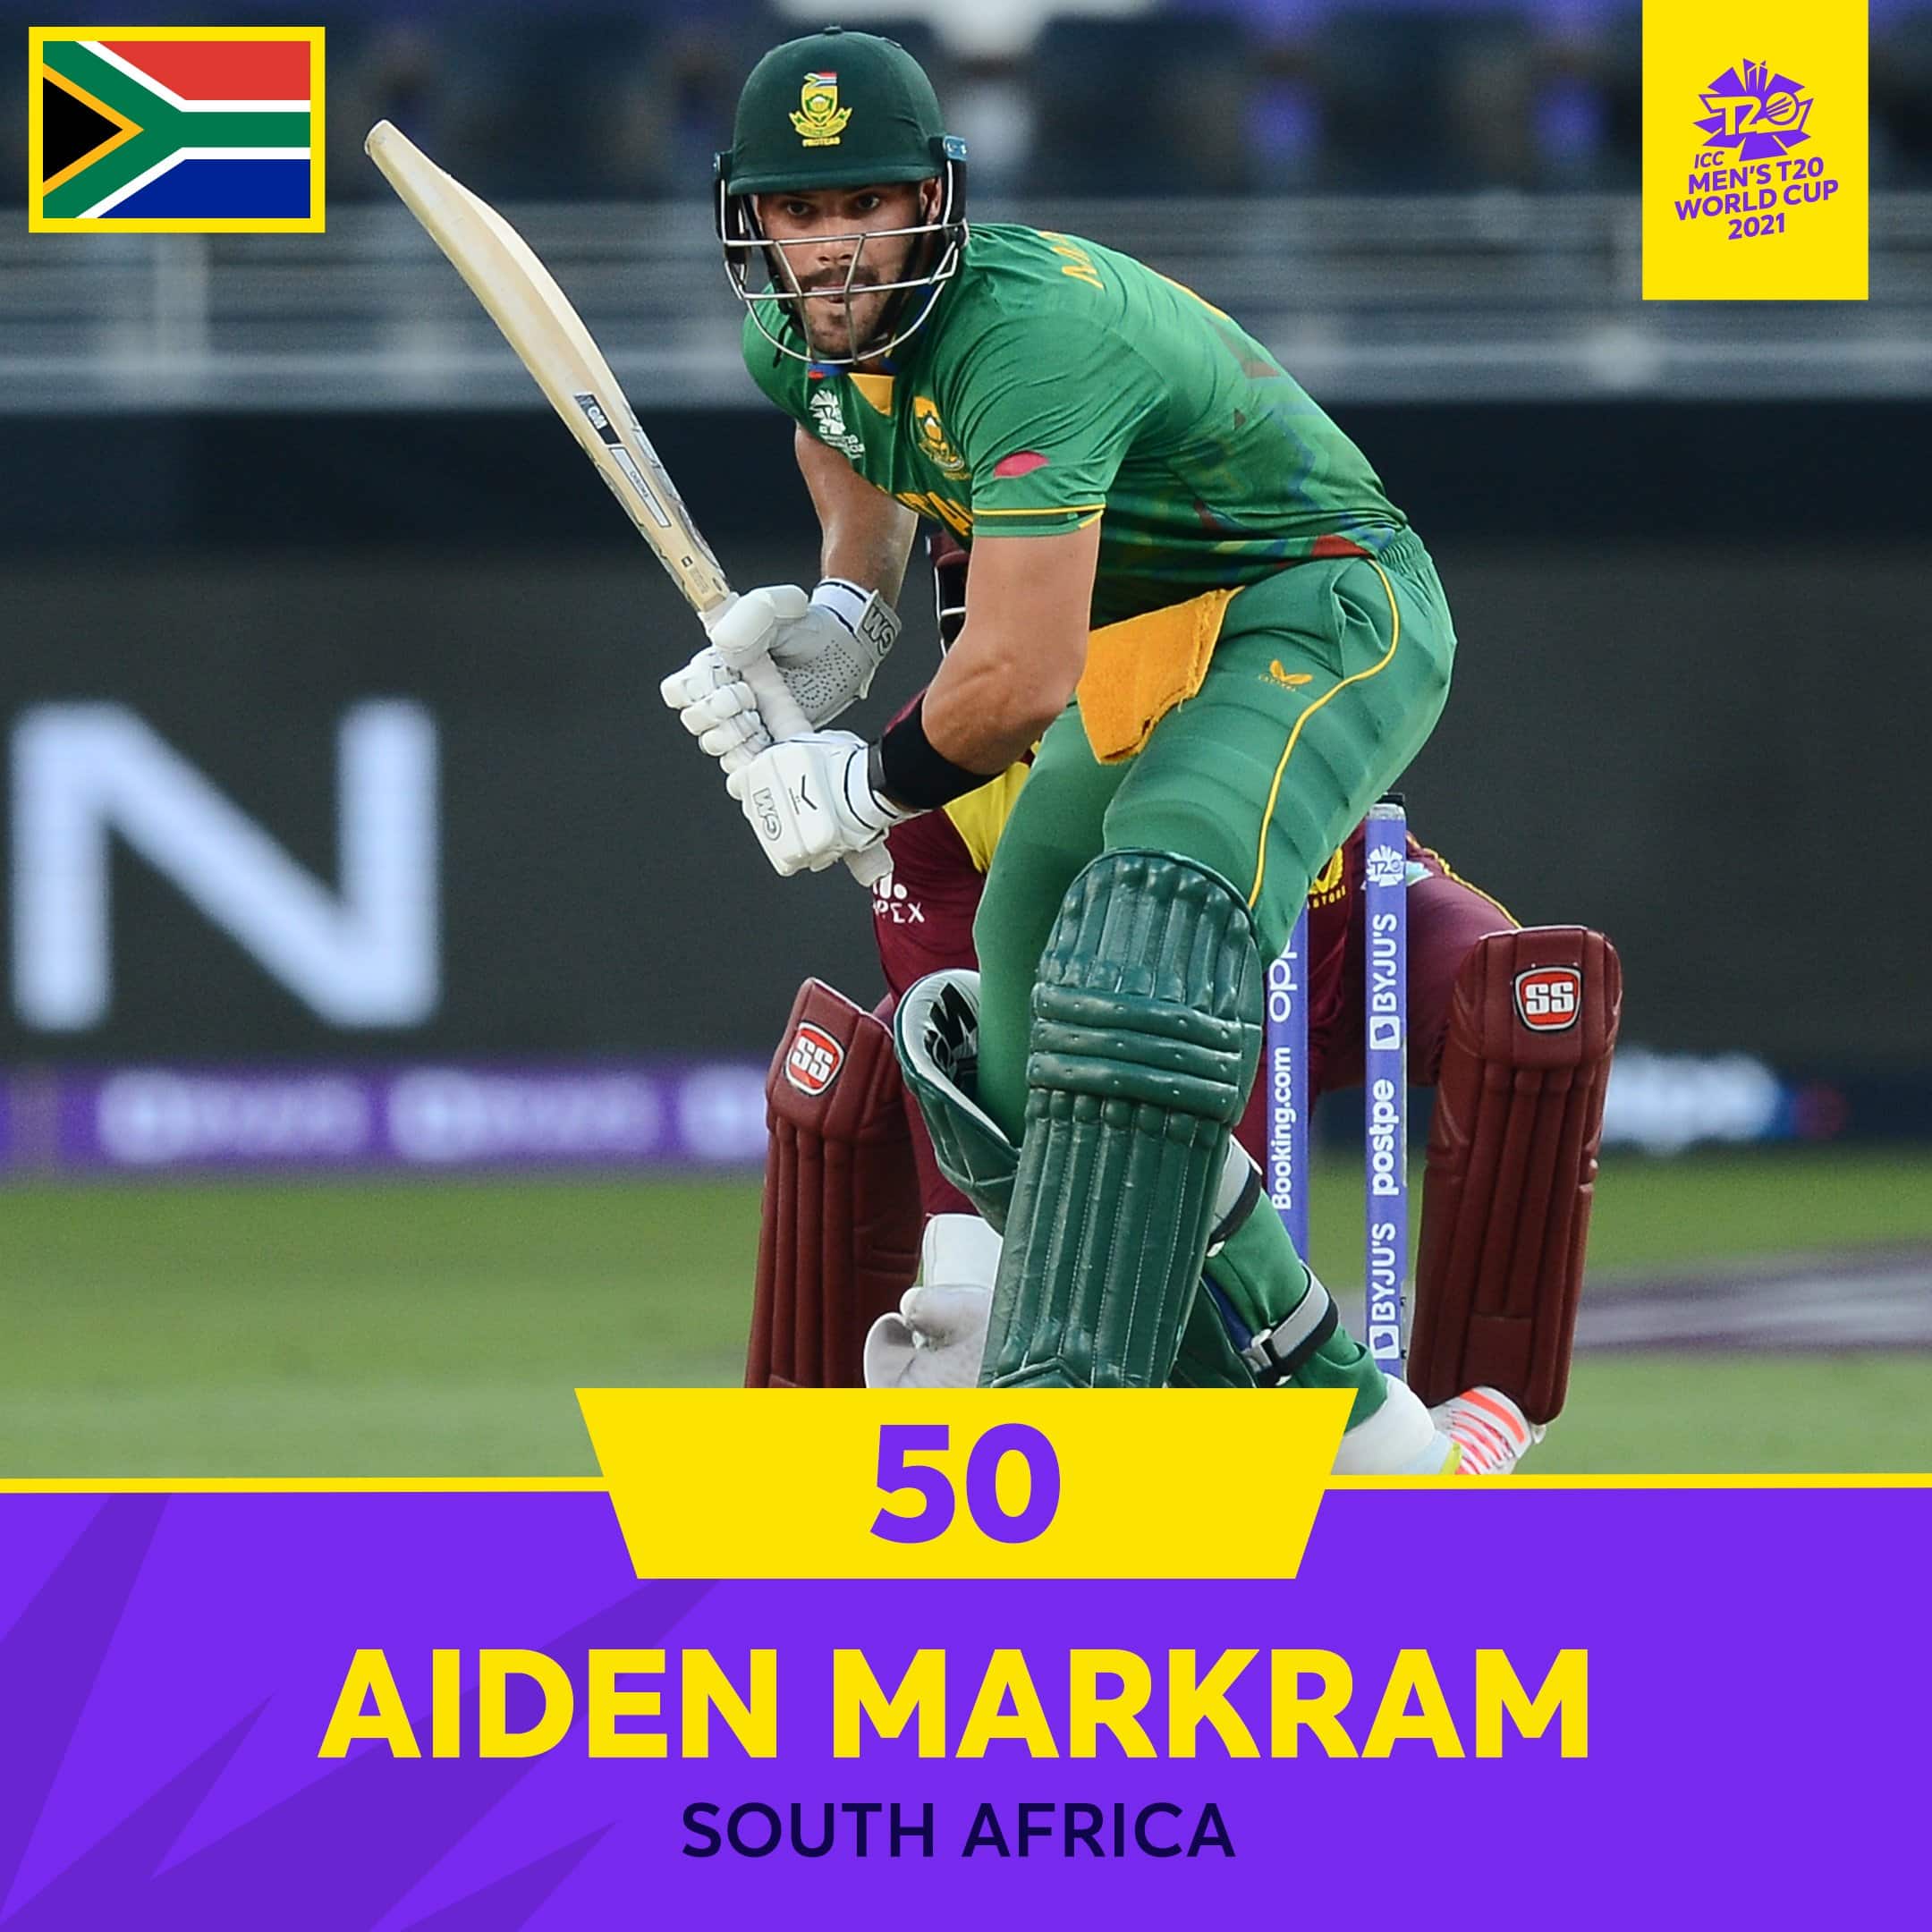 South Africa batsman Aiden Markram